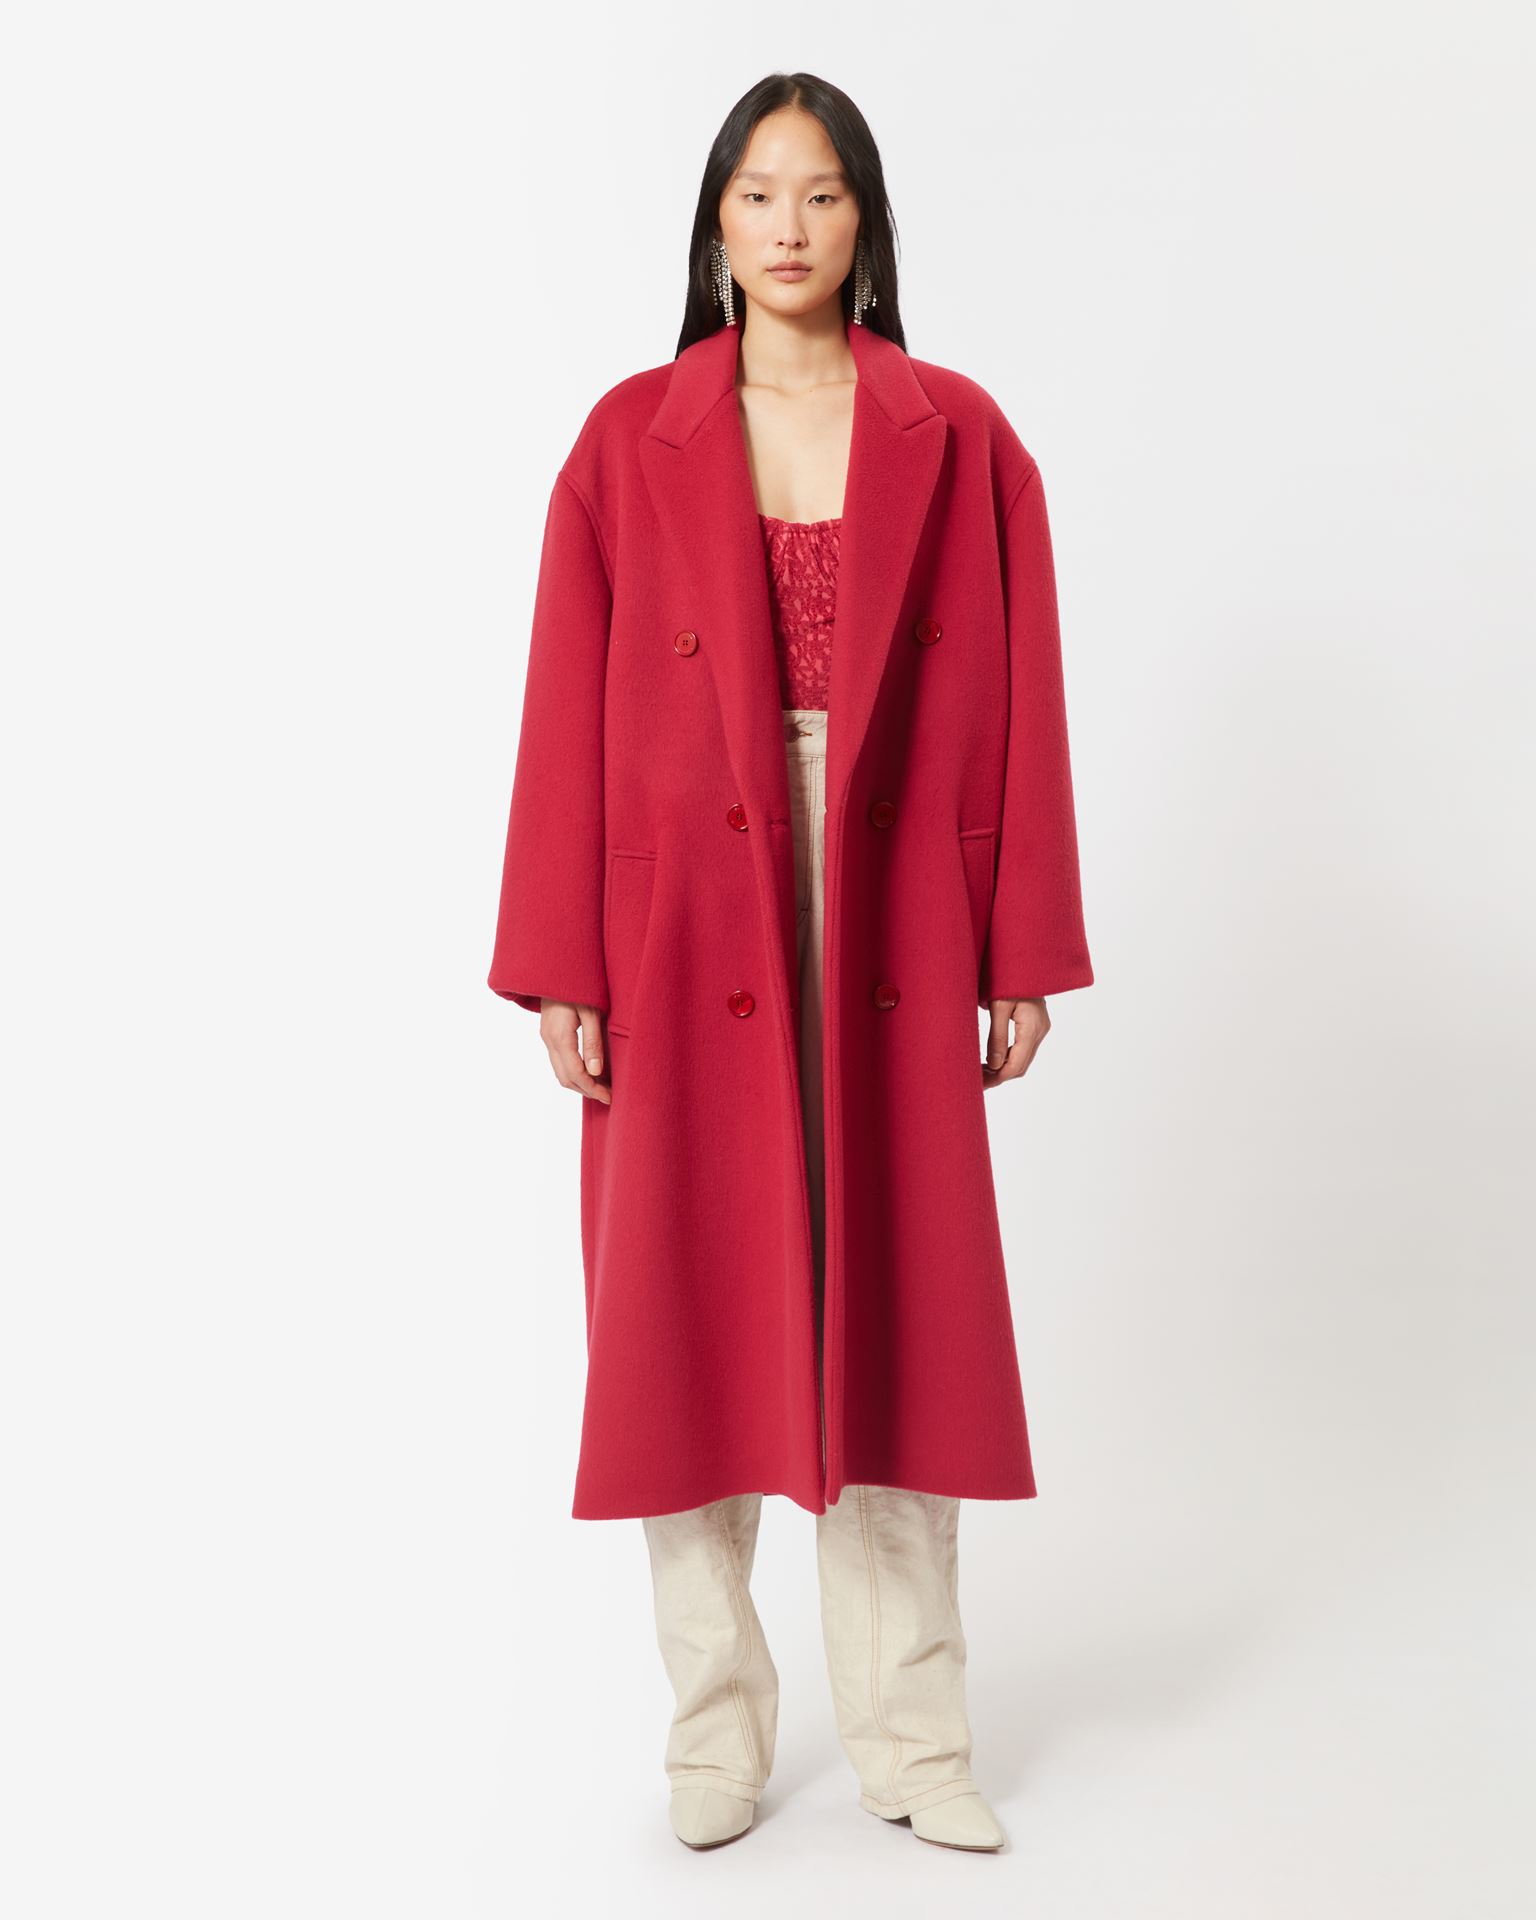 Isabel Marant, Theodore Wool Coat - Women - Pink